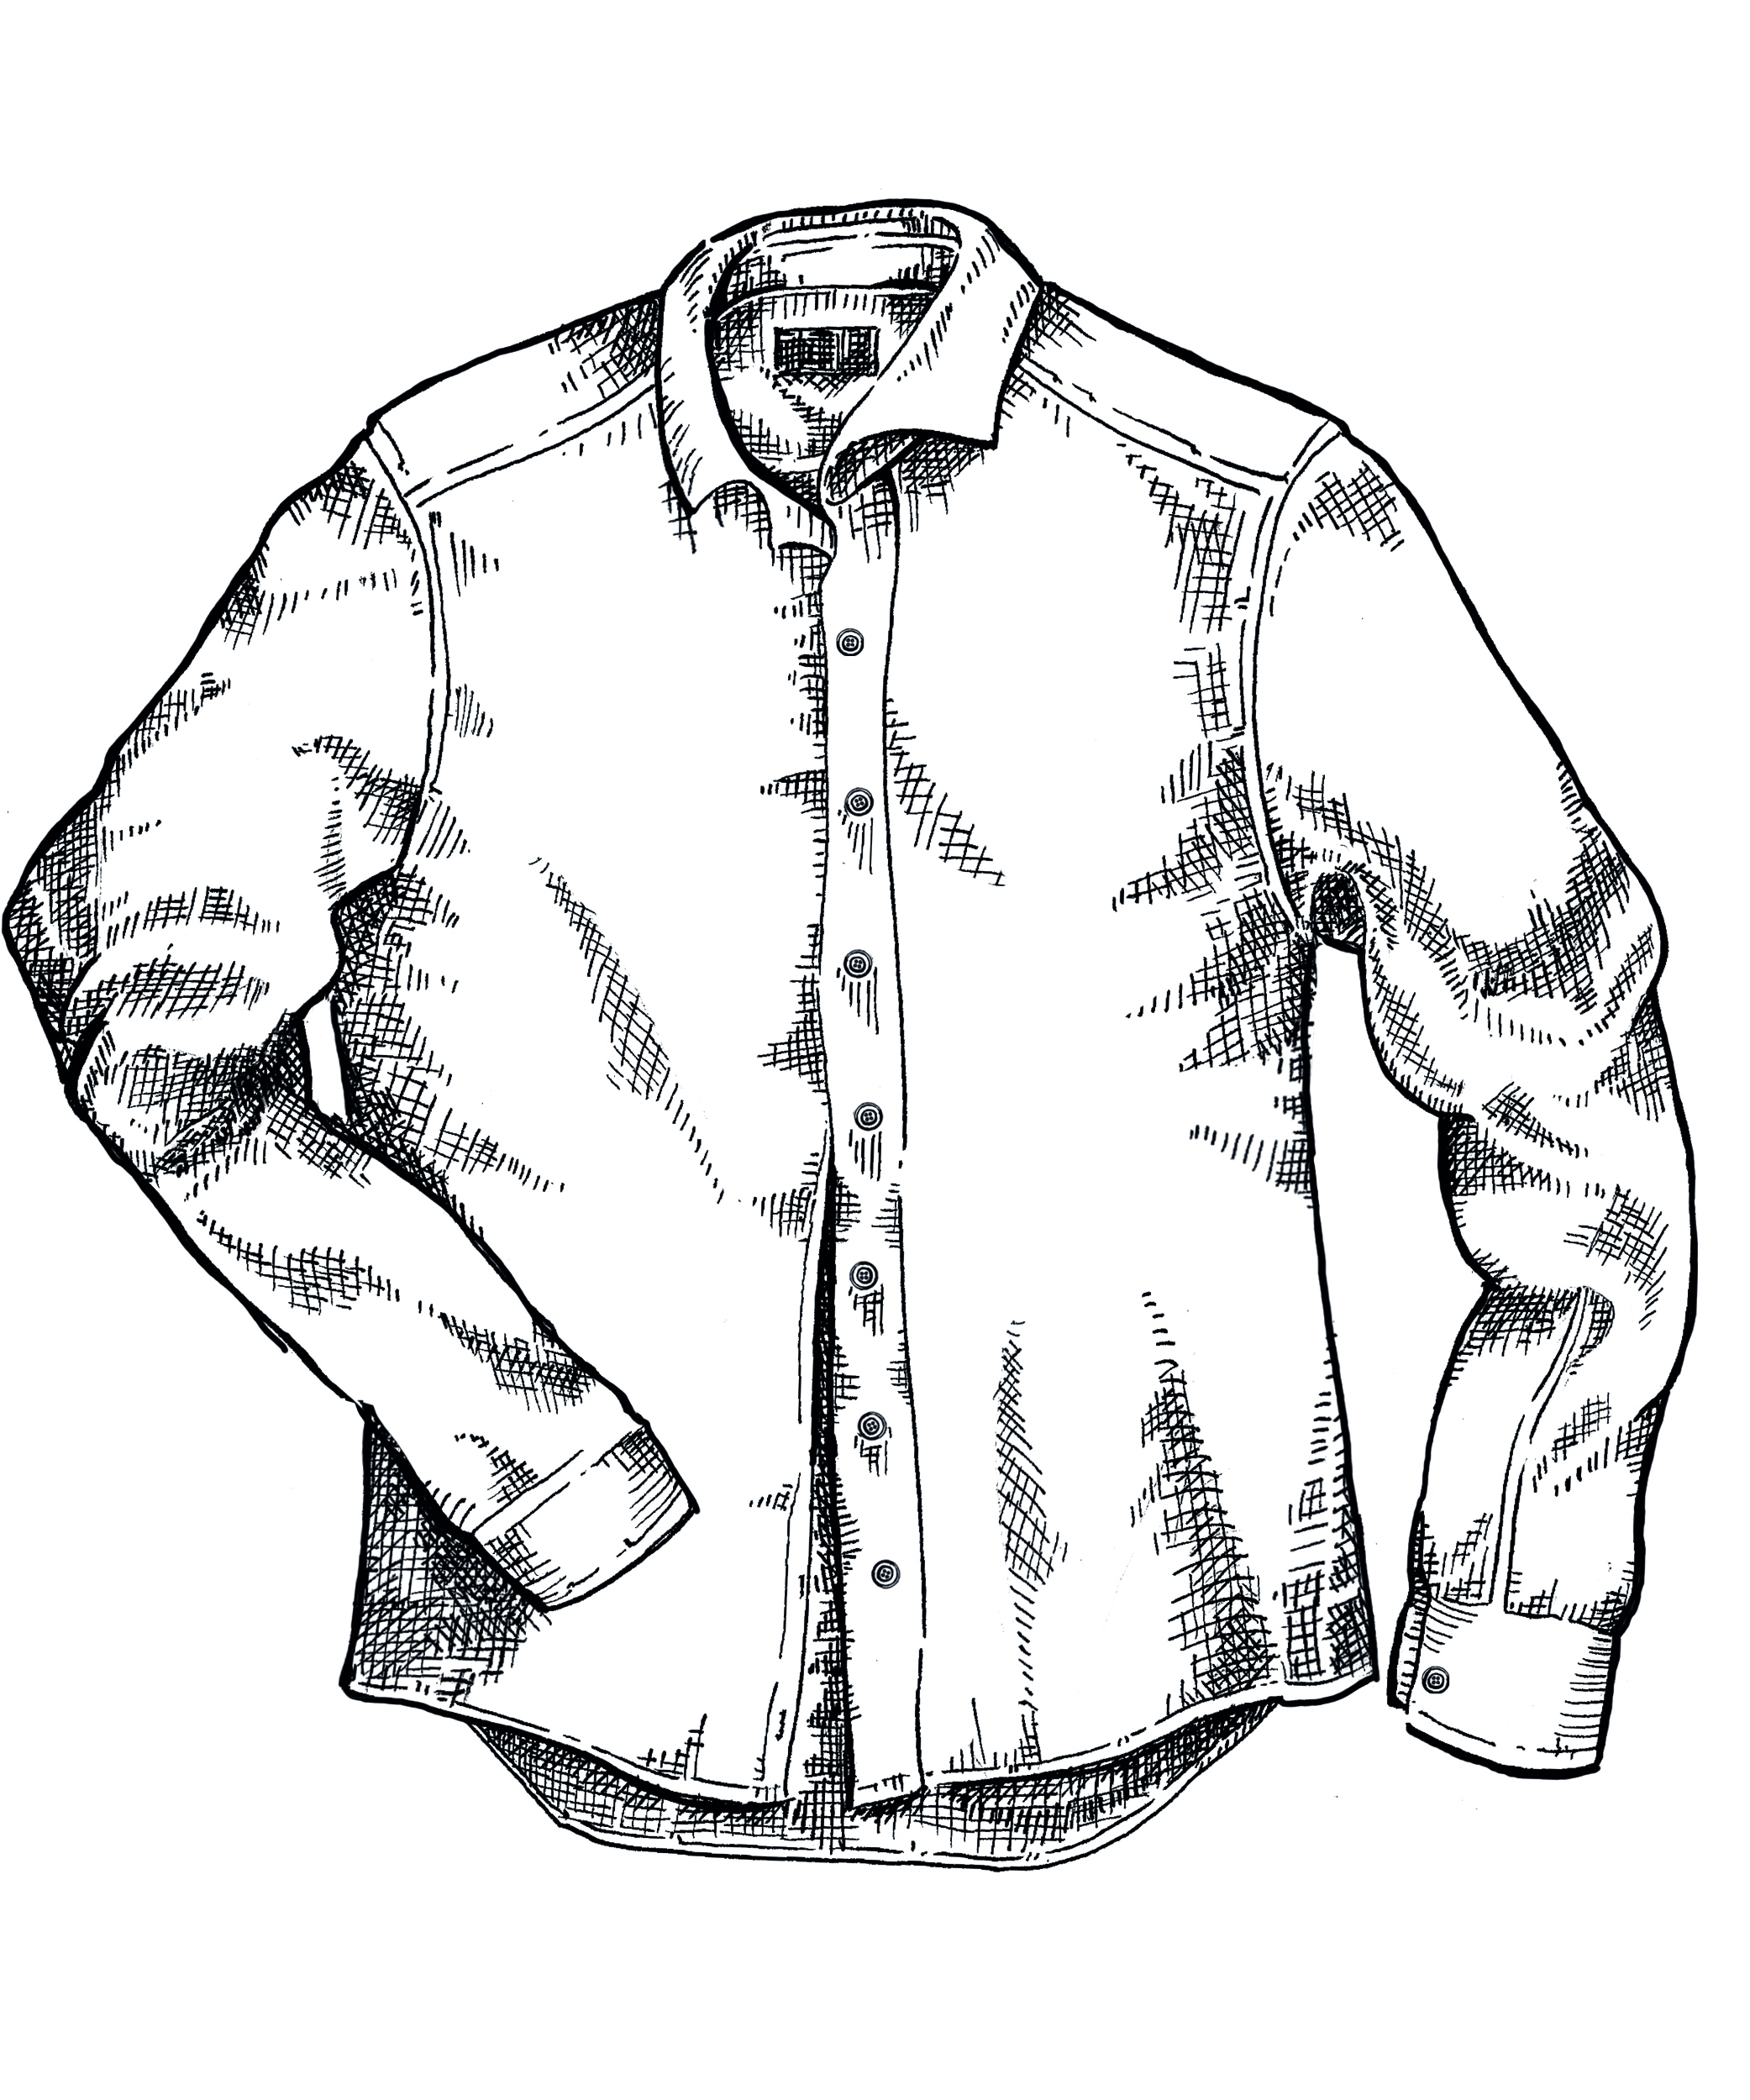 Shirt illustration for Berkeley. 2020. Crosshatch technique in ink.